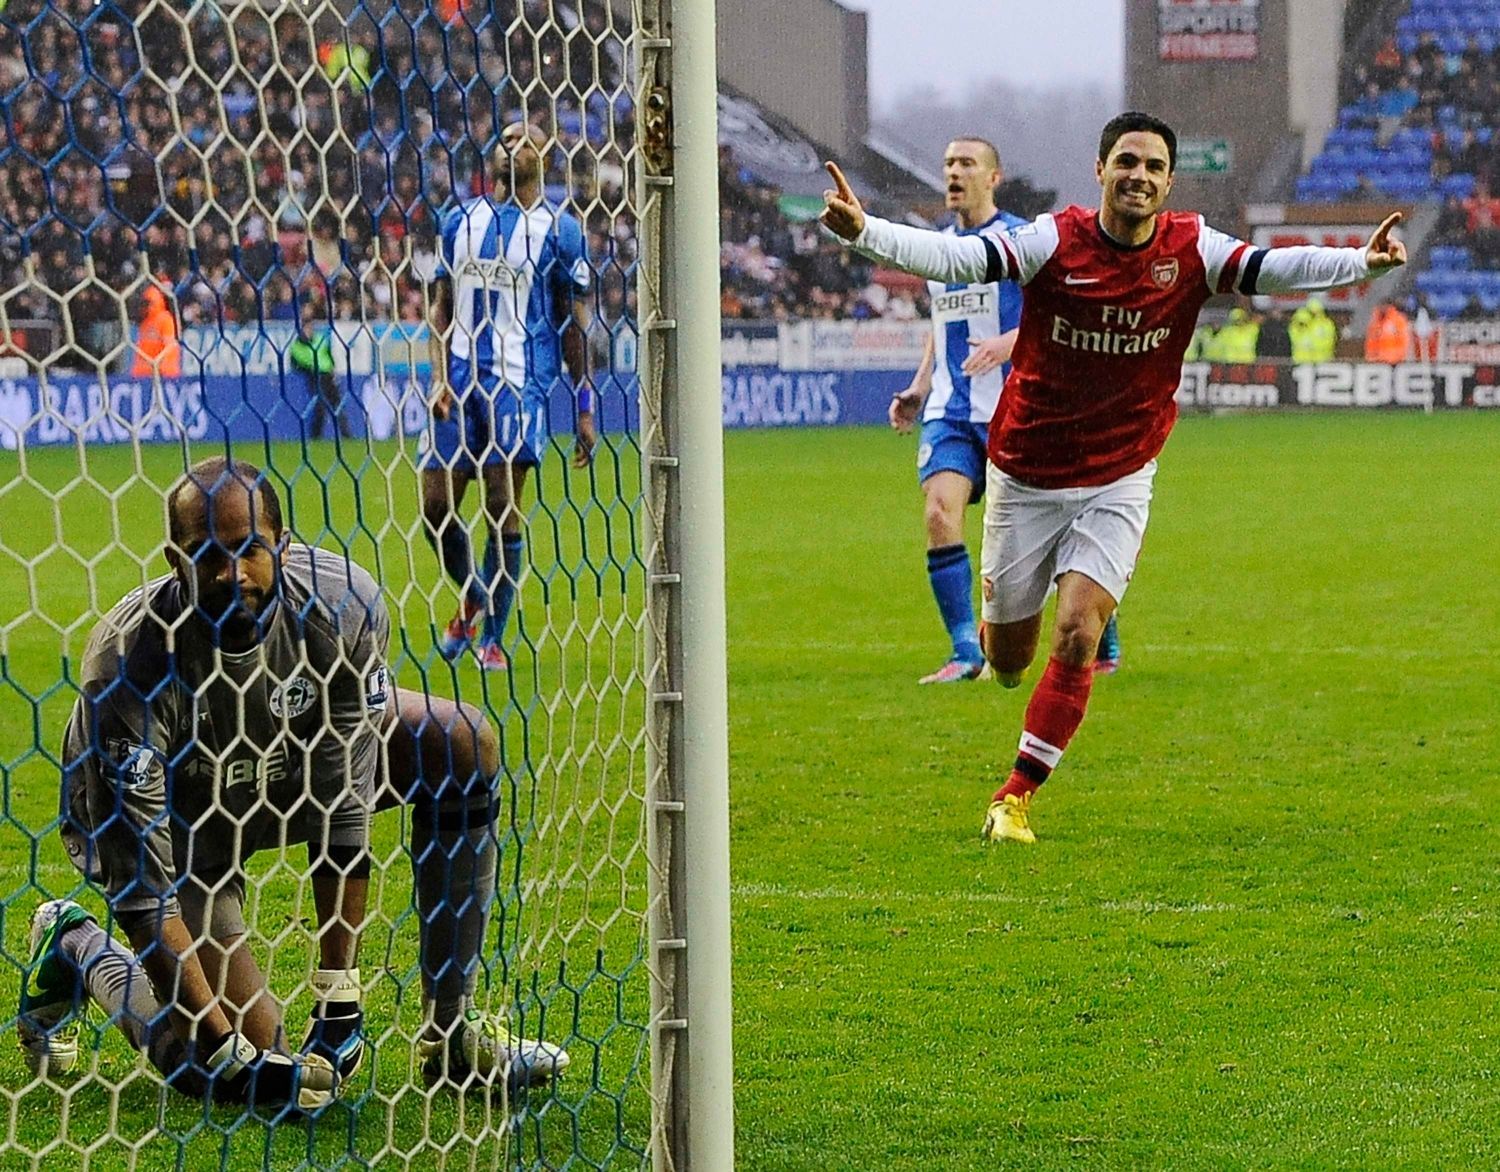 Premier League, Wigan - Arsenal: Mikel Arteta